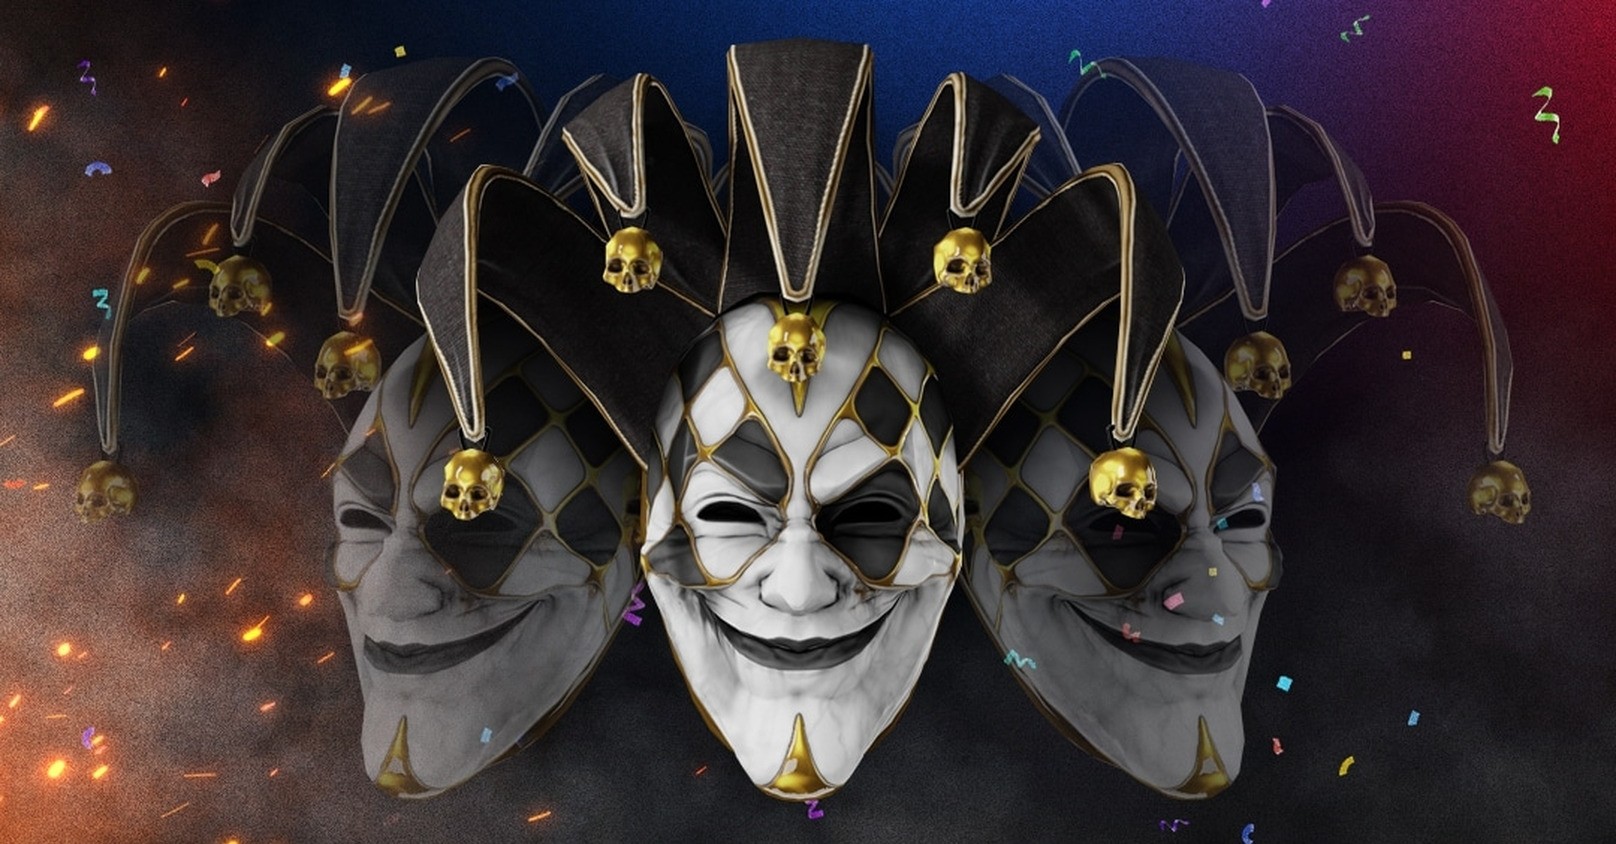 PAYDAY 2 - 10th Anniversary Jester Mask DLC Steam CD Key 1.44 USD